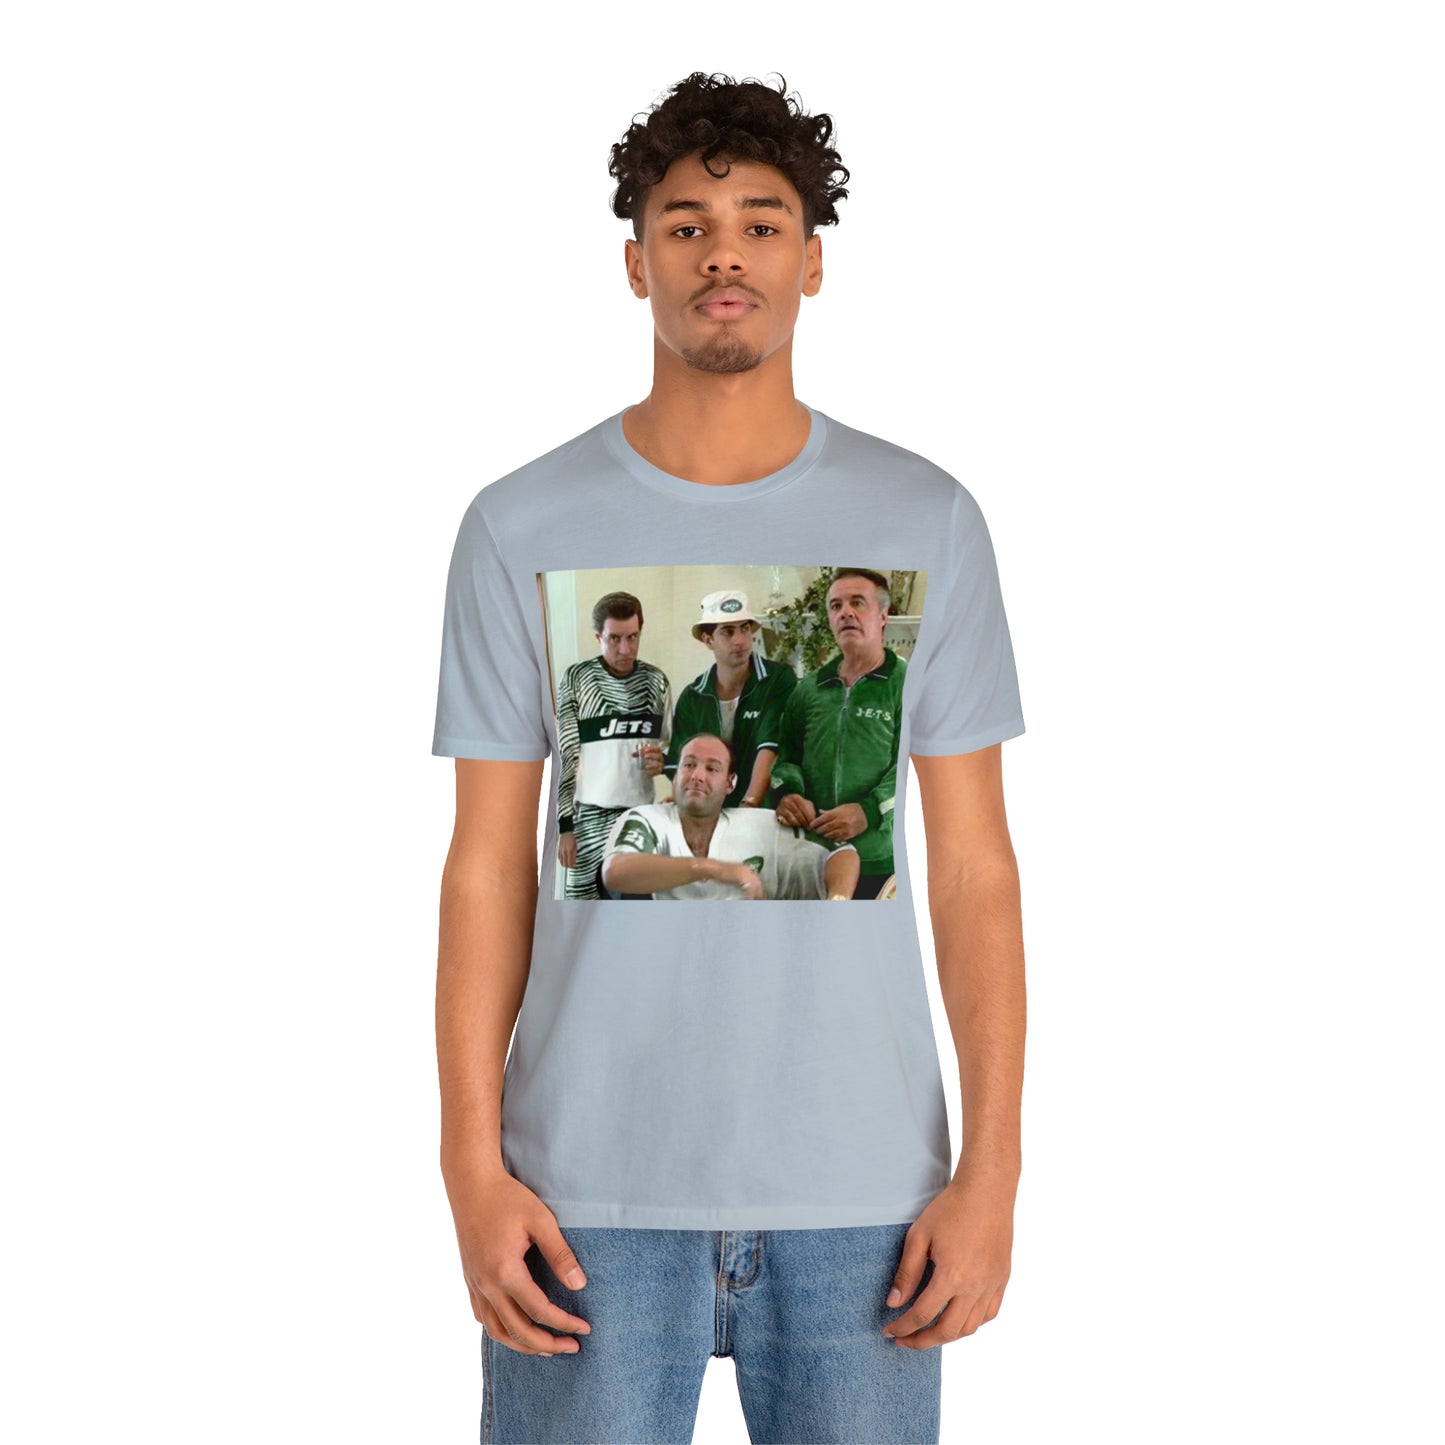 Sopranos Jets Shirt